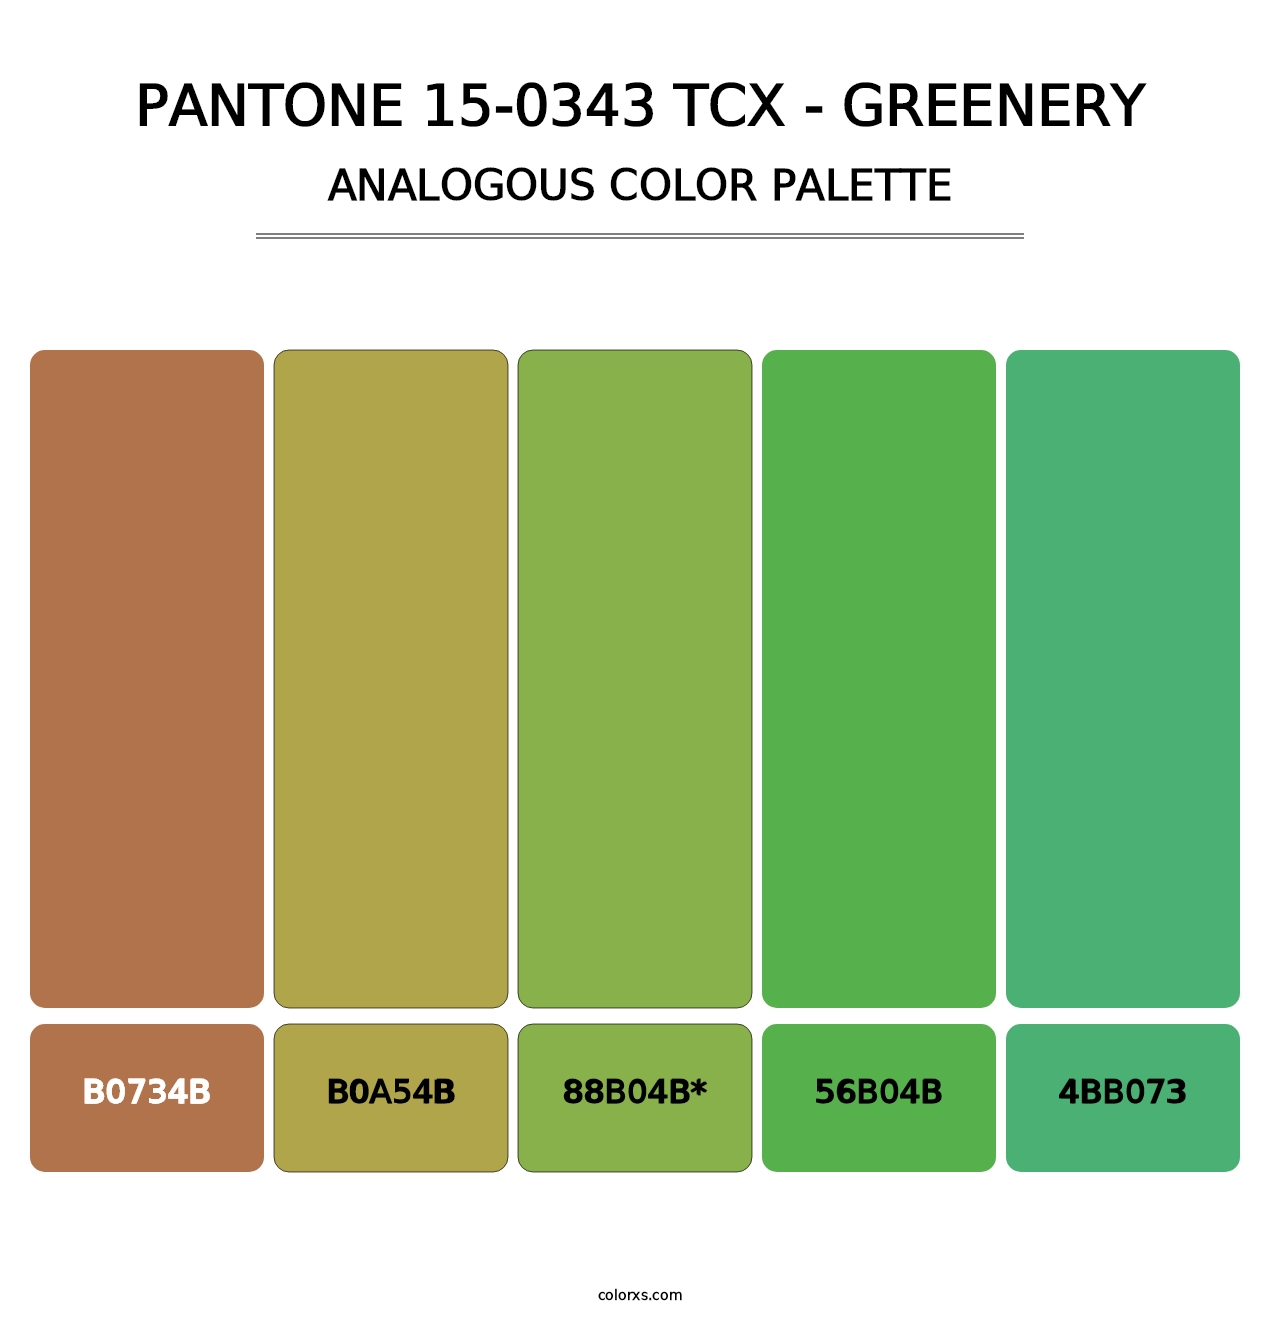 PANTONE 15-0343 TCX - Greenery - Analogous Color Palette